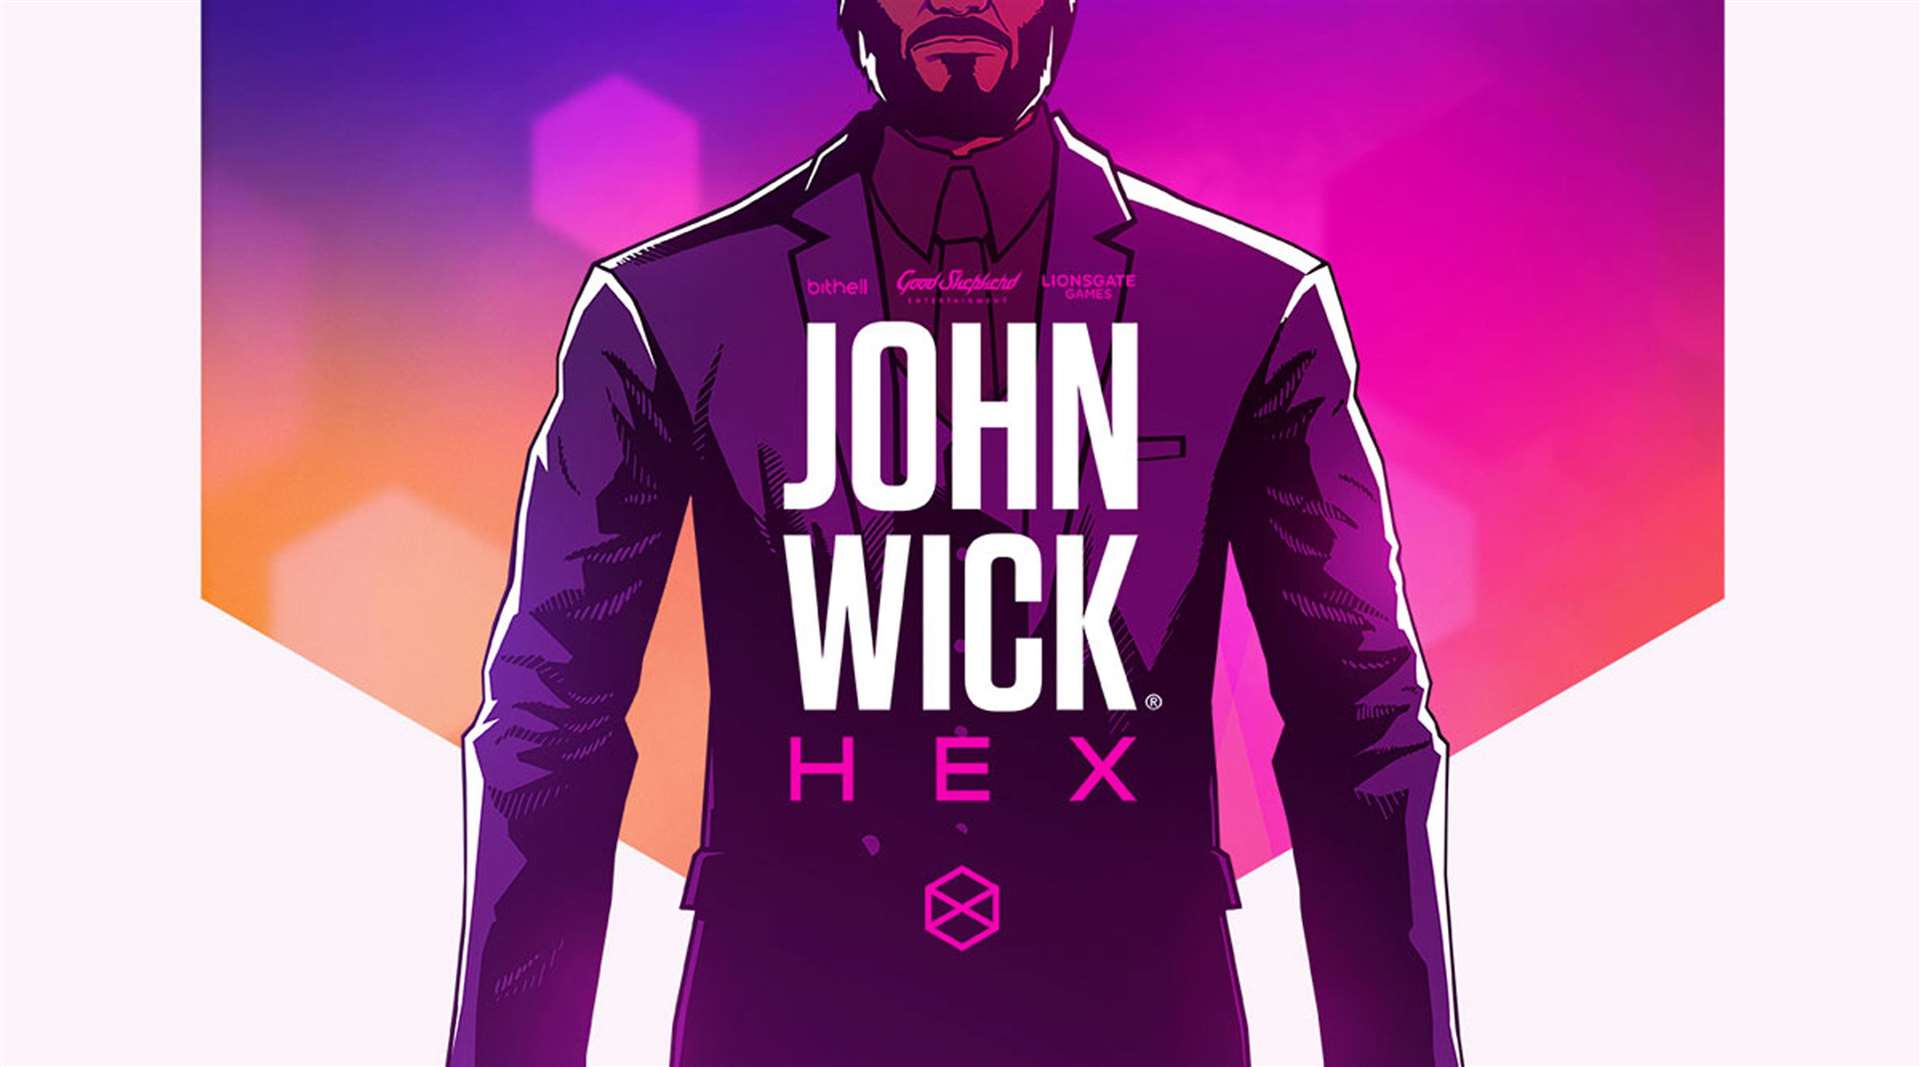 John Wick Hex. Picture: Handout/PA